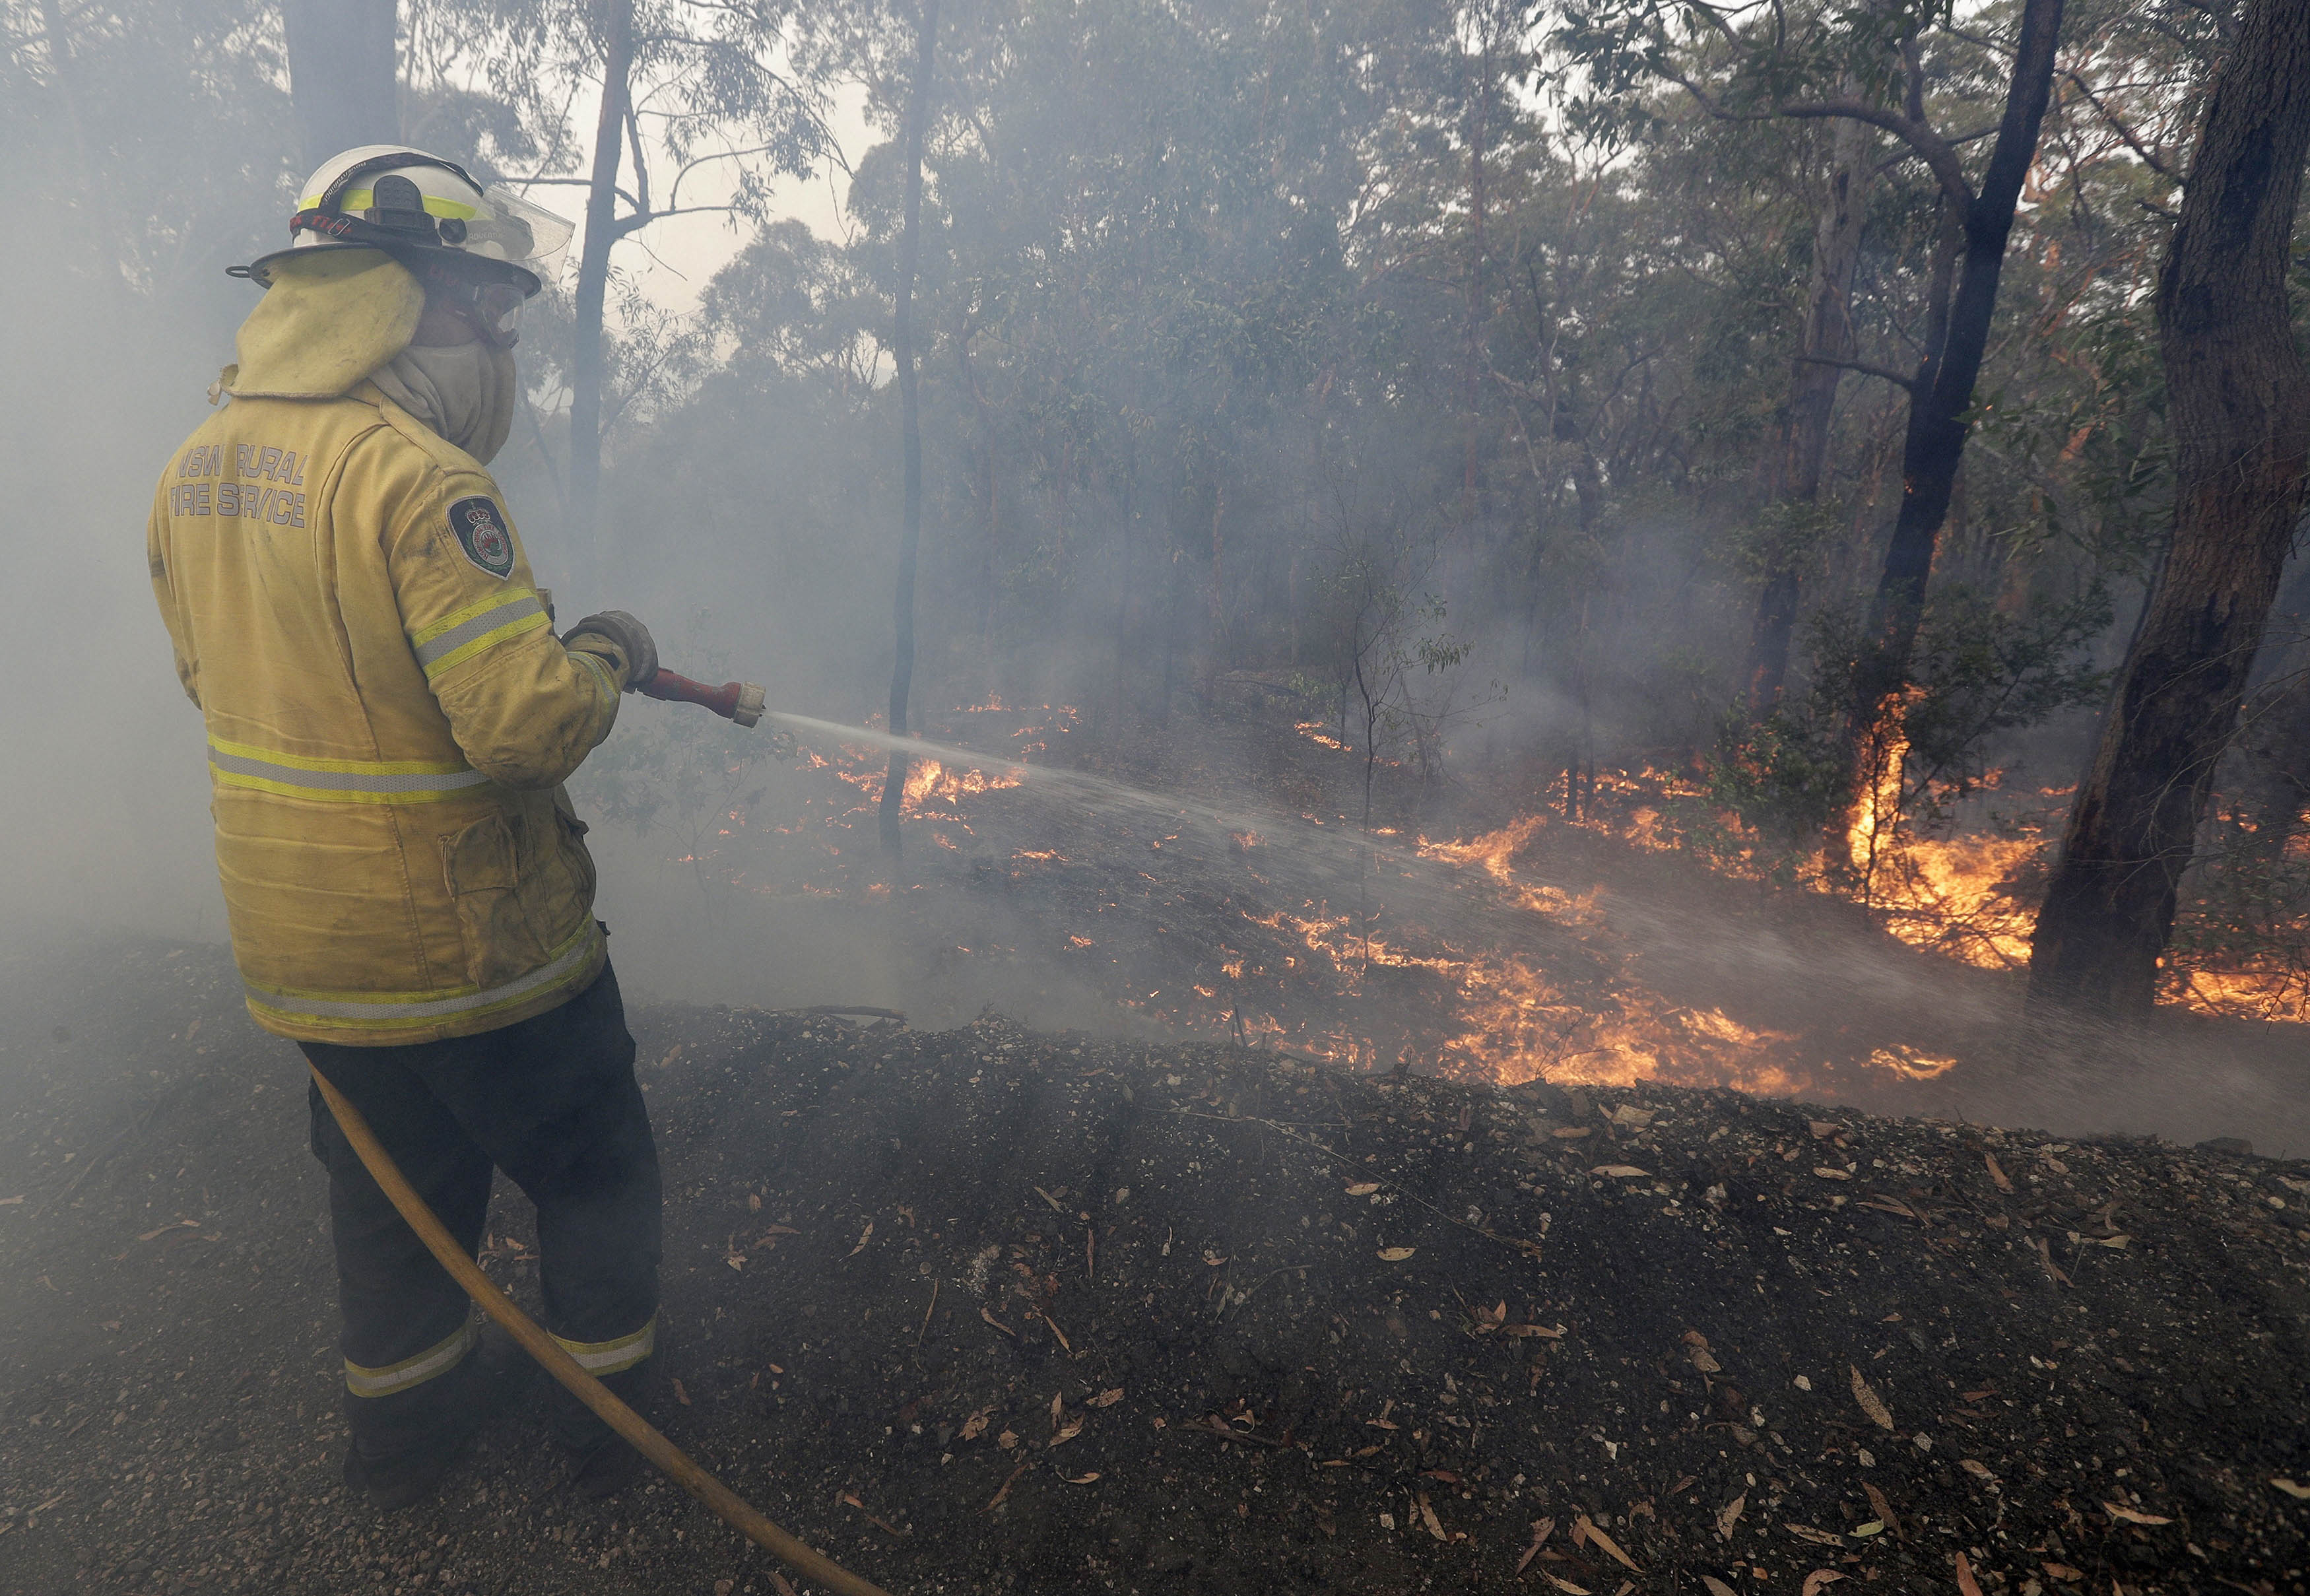 Heatwave intensifies bush fires in Australia